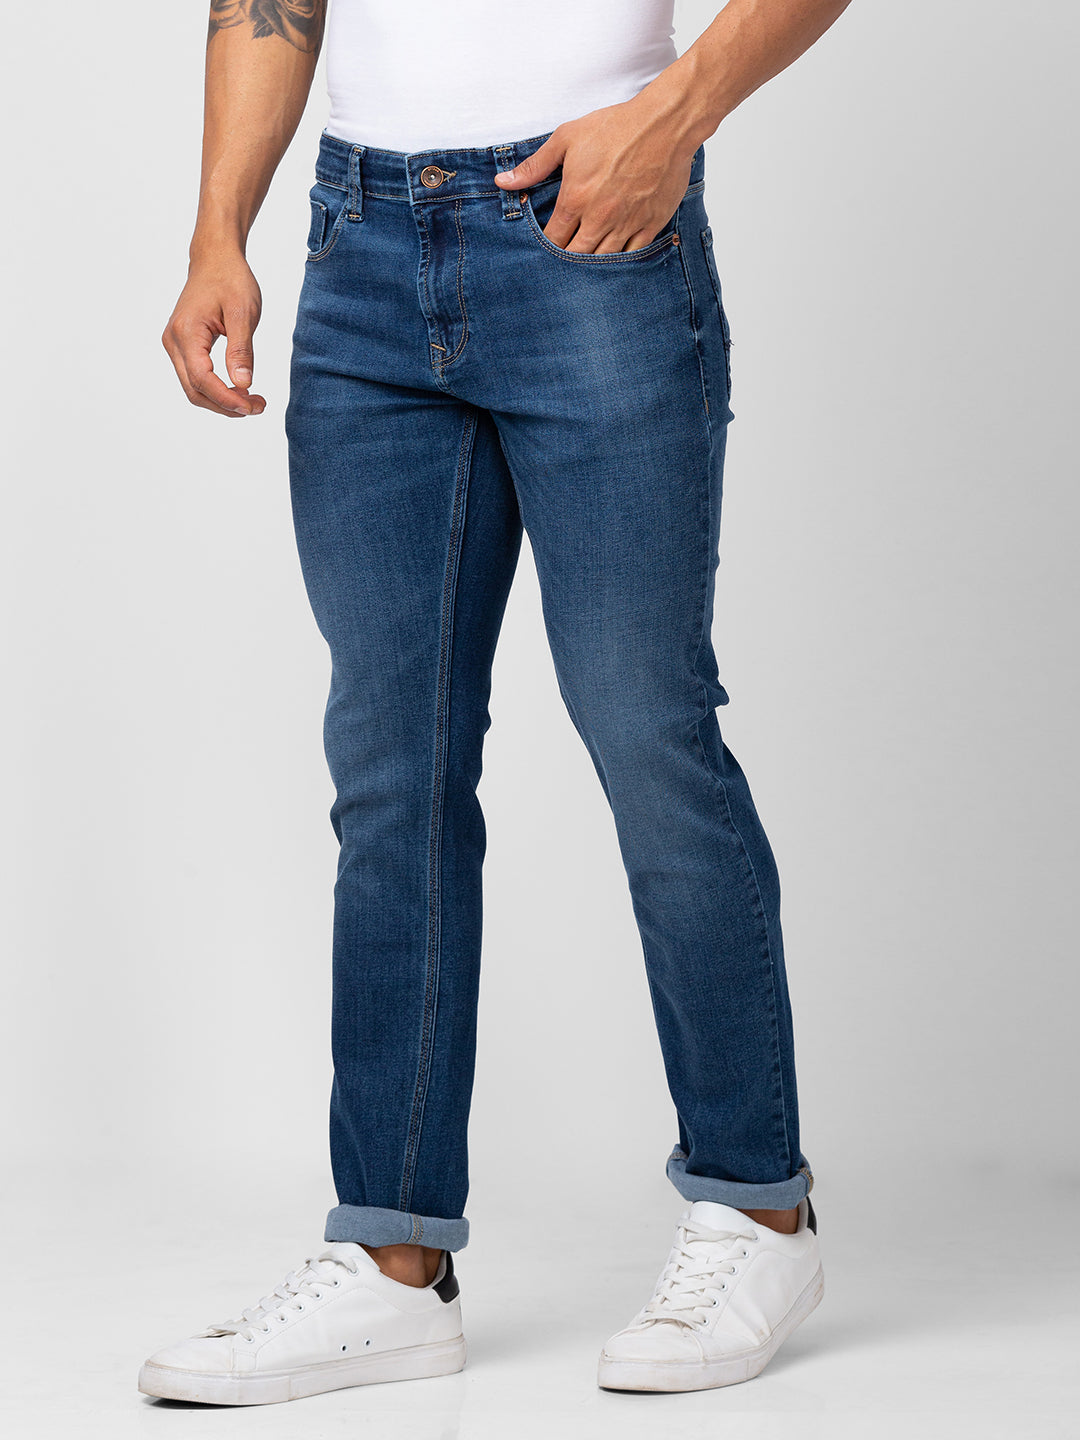 Spykar Men Dark Blue Cotton Stretch Regular Fit Narrow Length Jeans (Rover)